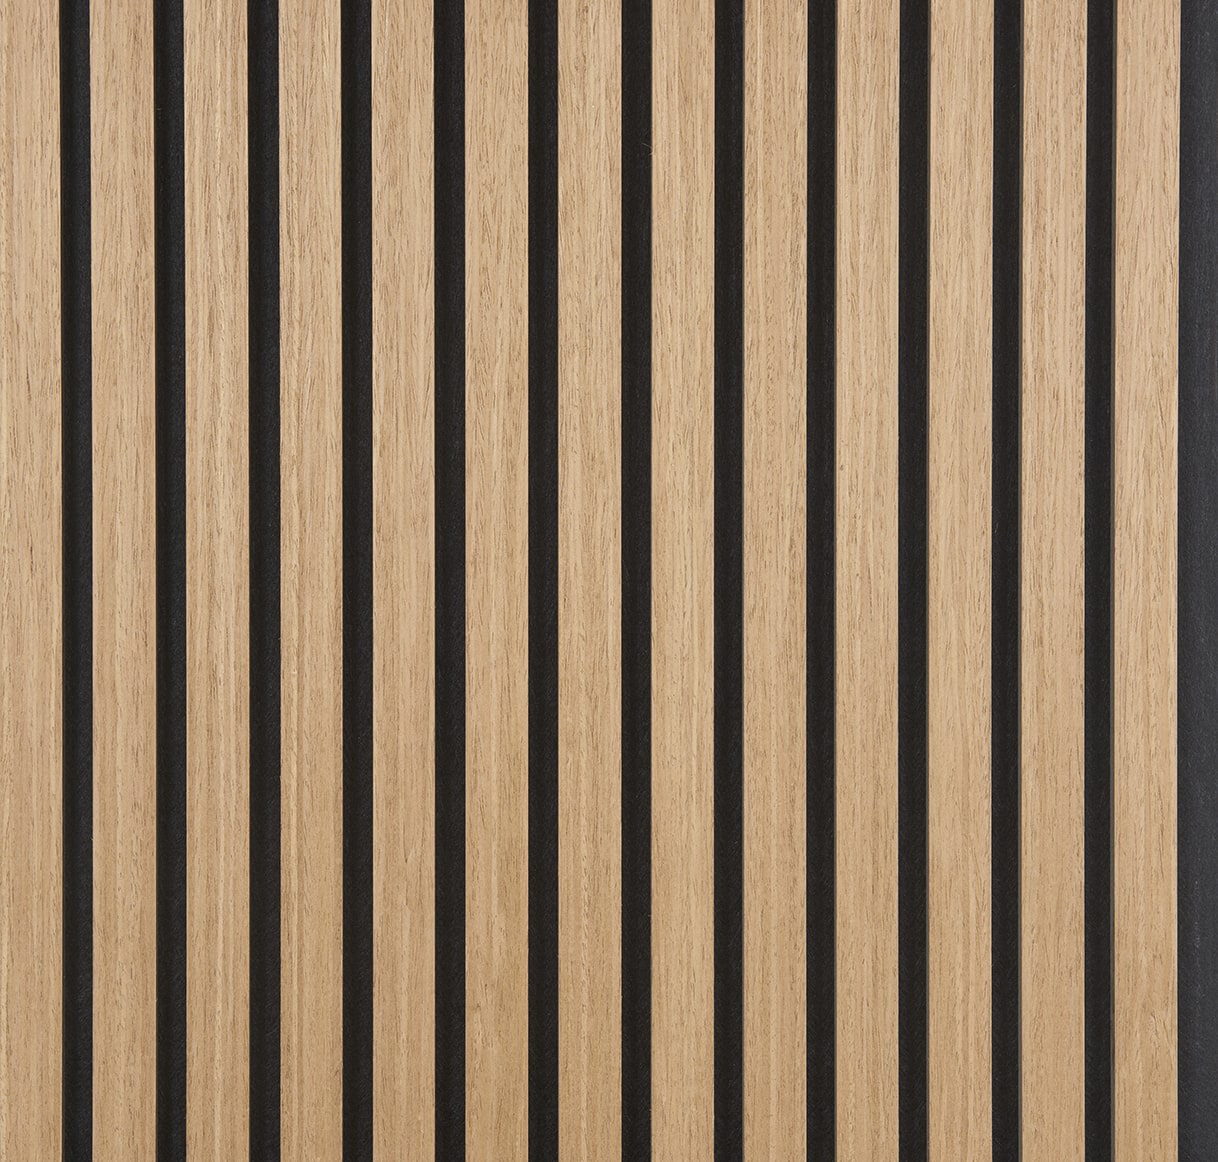 Acoustic Wood Panels 244x52 cm Harmony Max - Oiled Oak BEST BUY ✅